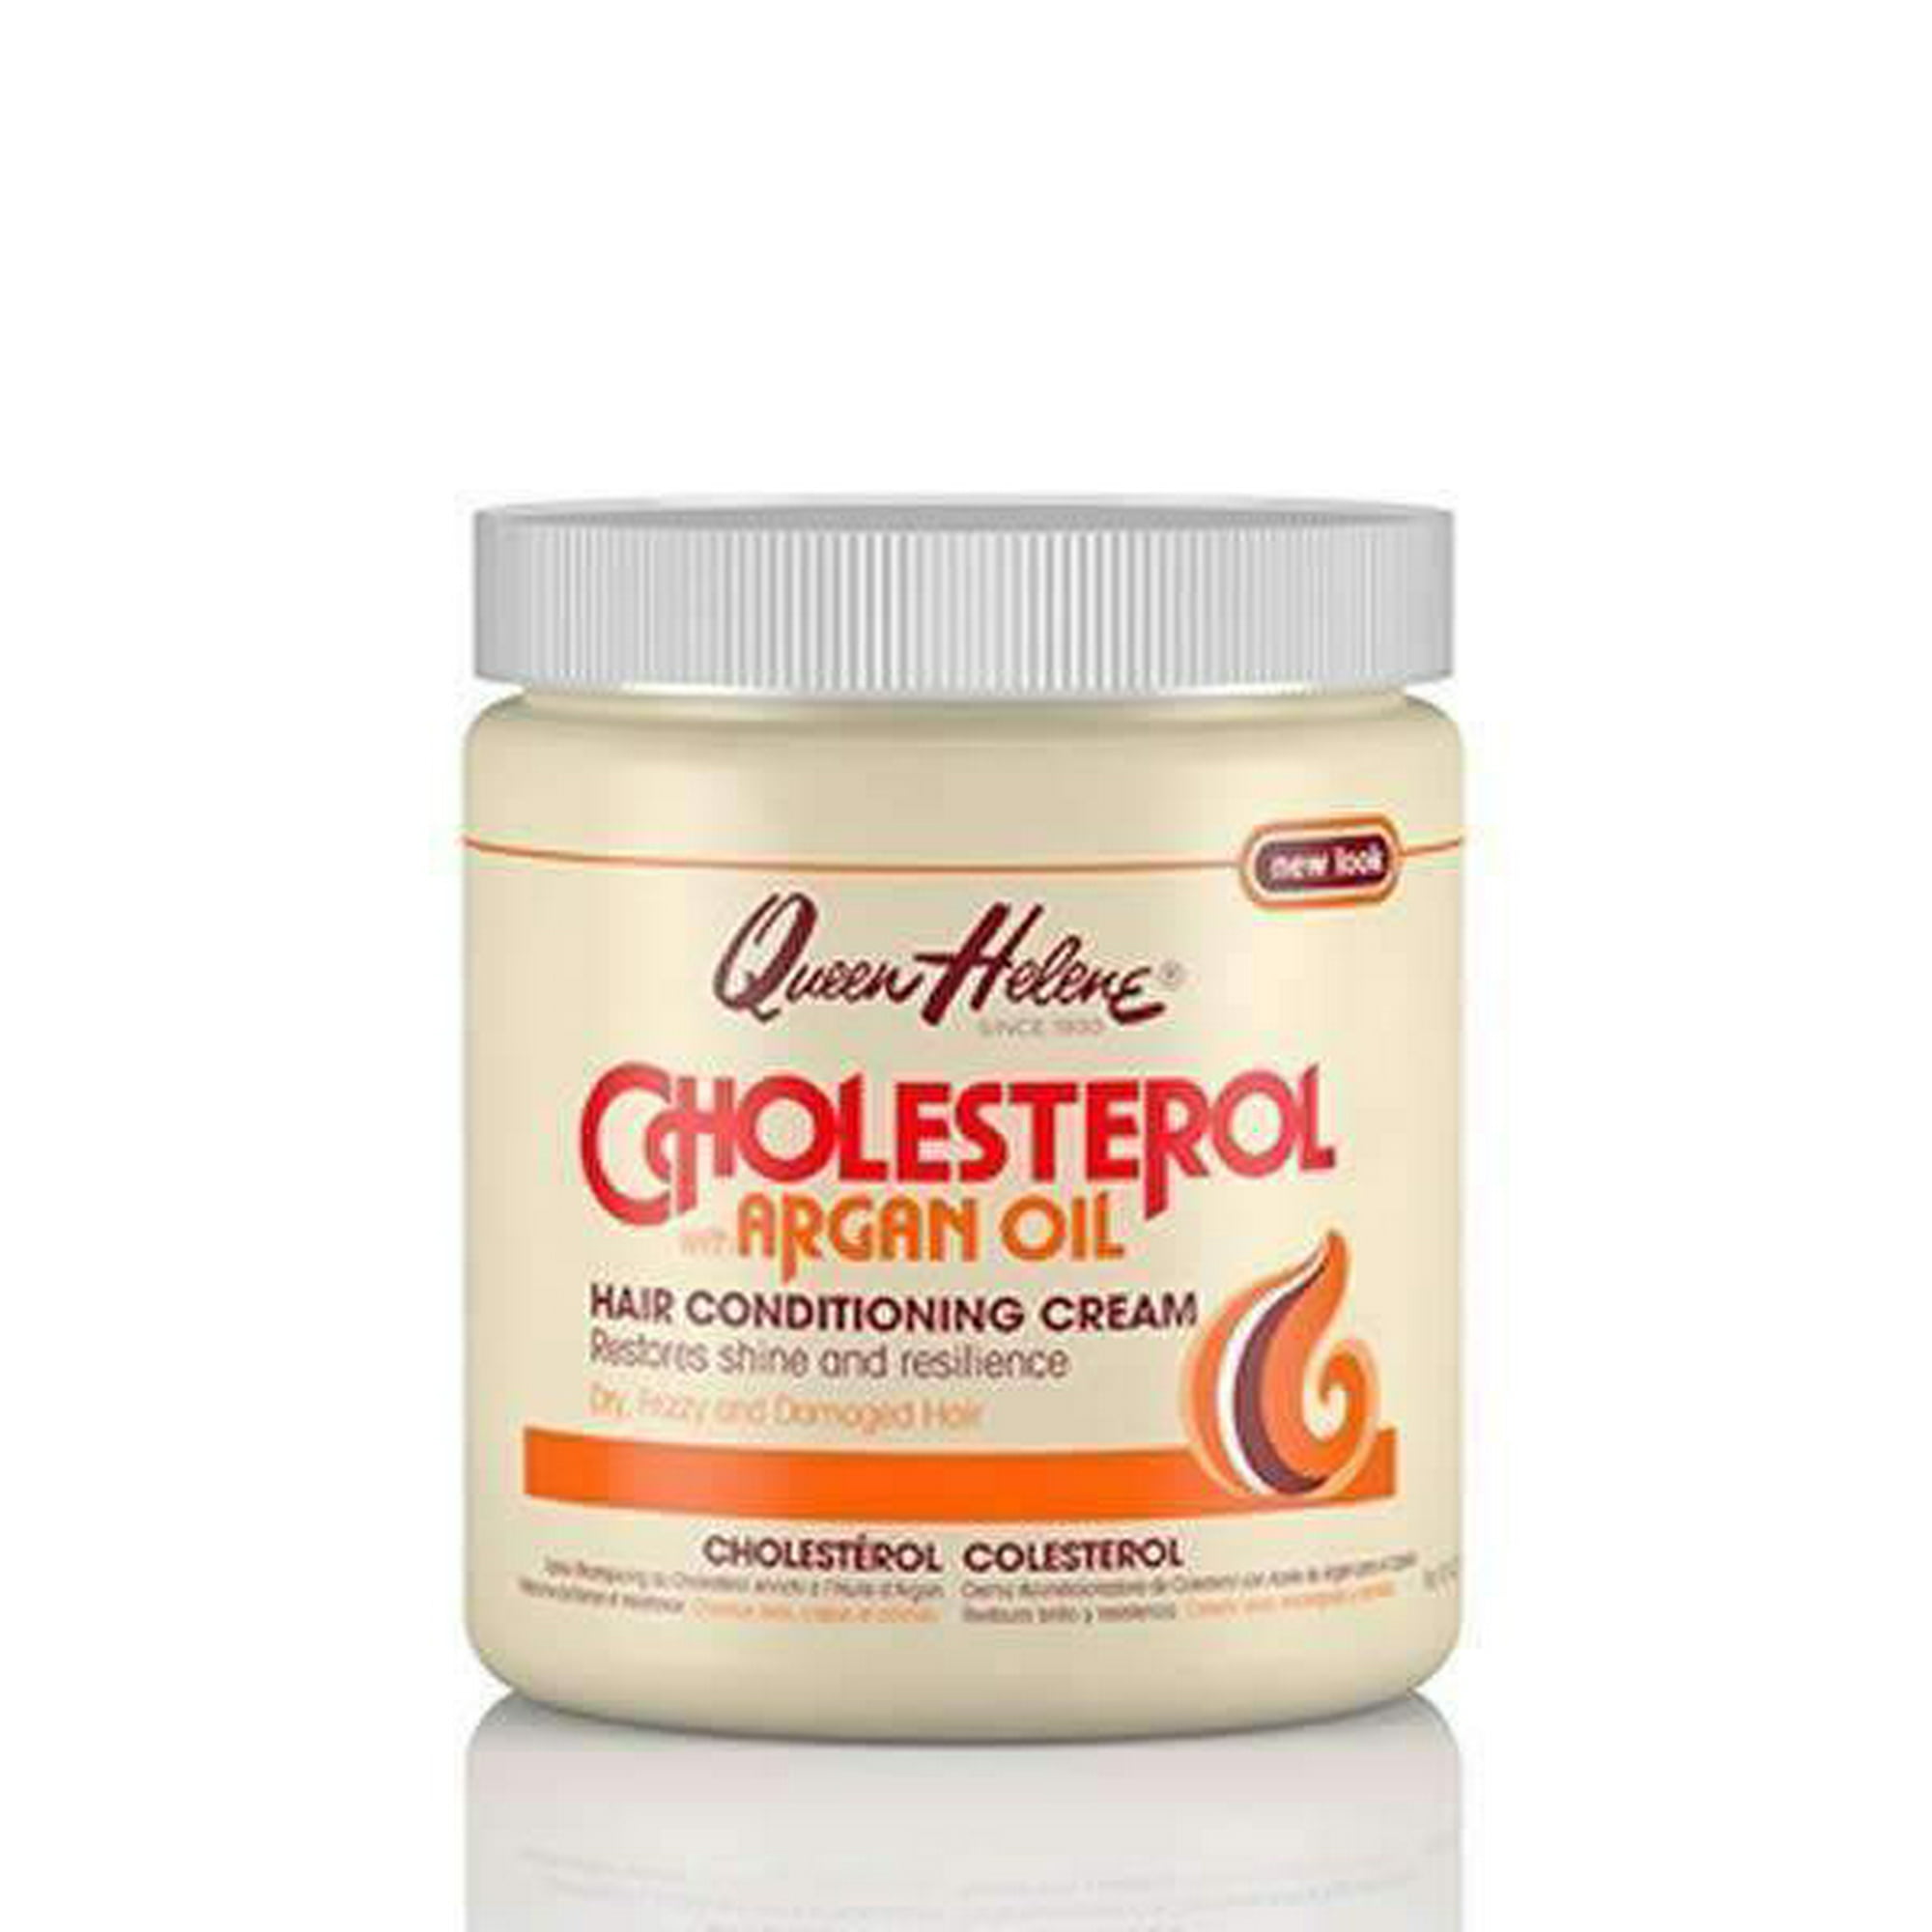 Queen Helene Cholesterol Hair Conditioning Cream w/ Argan Oil | Walmart  Canada